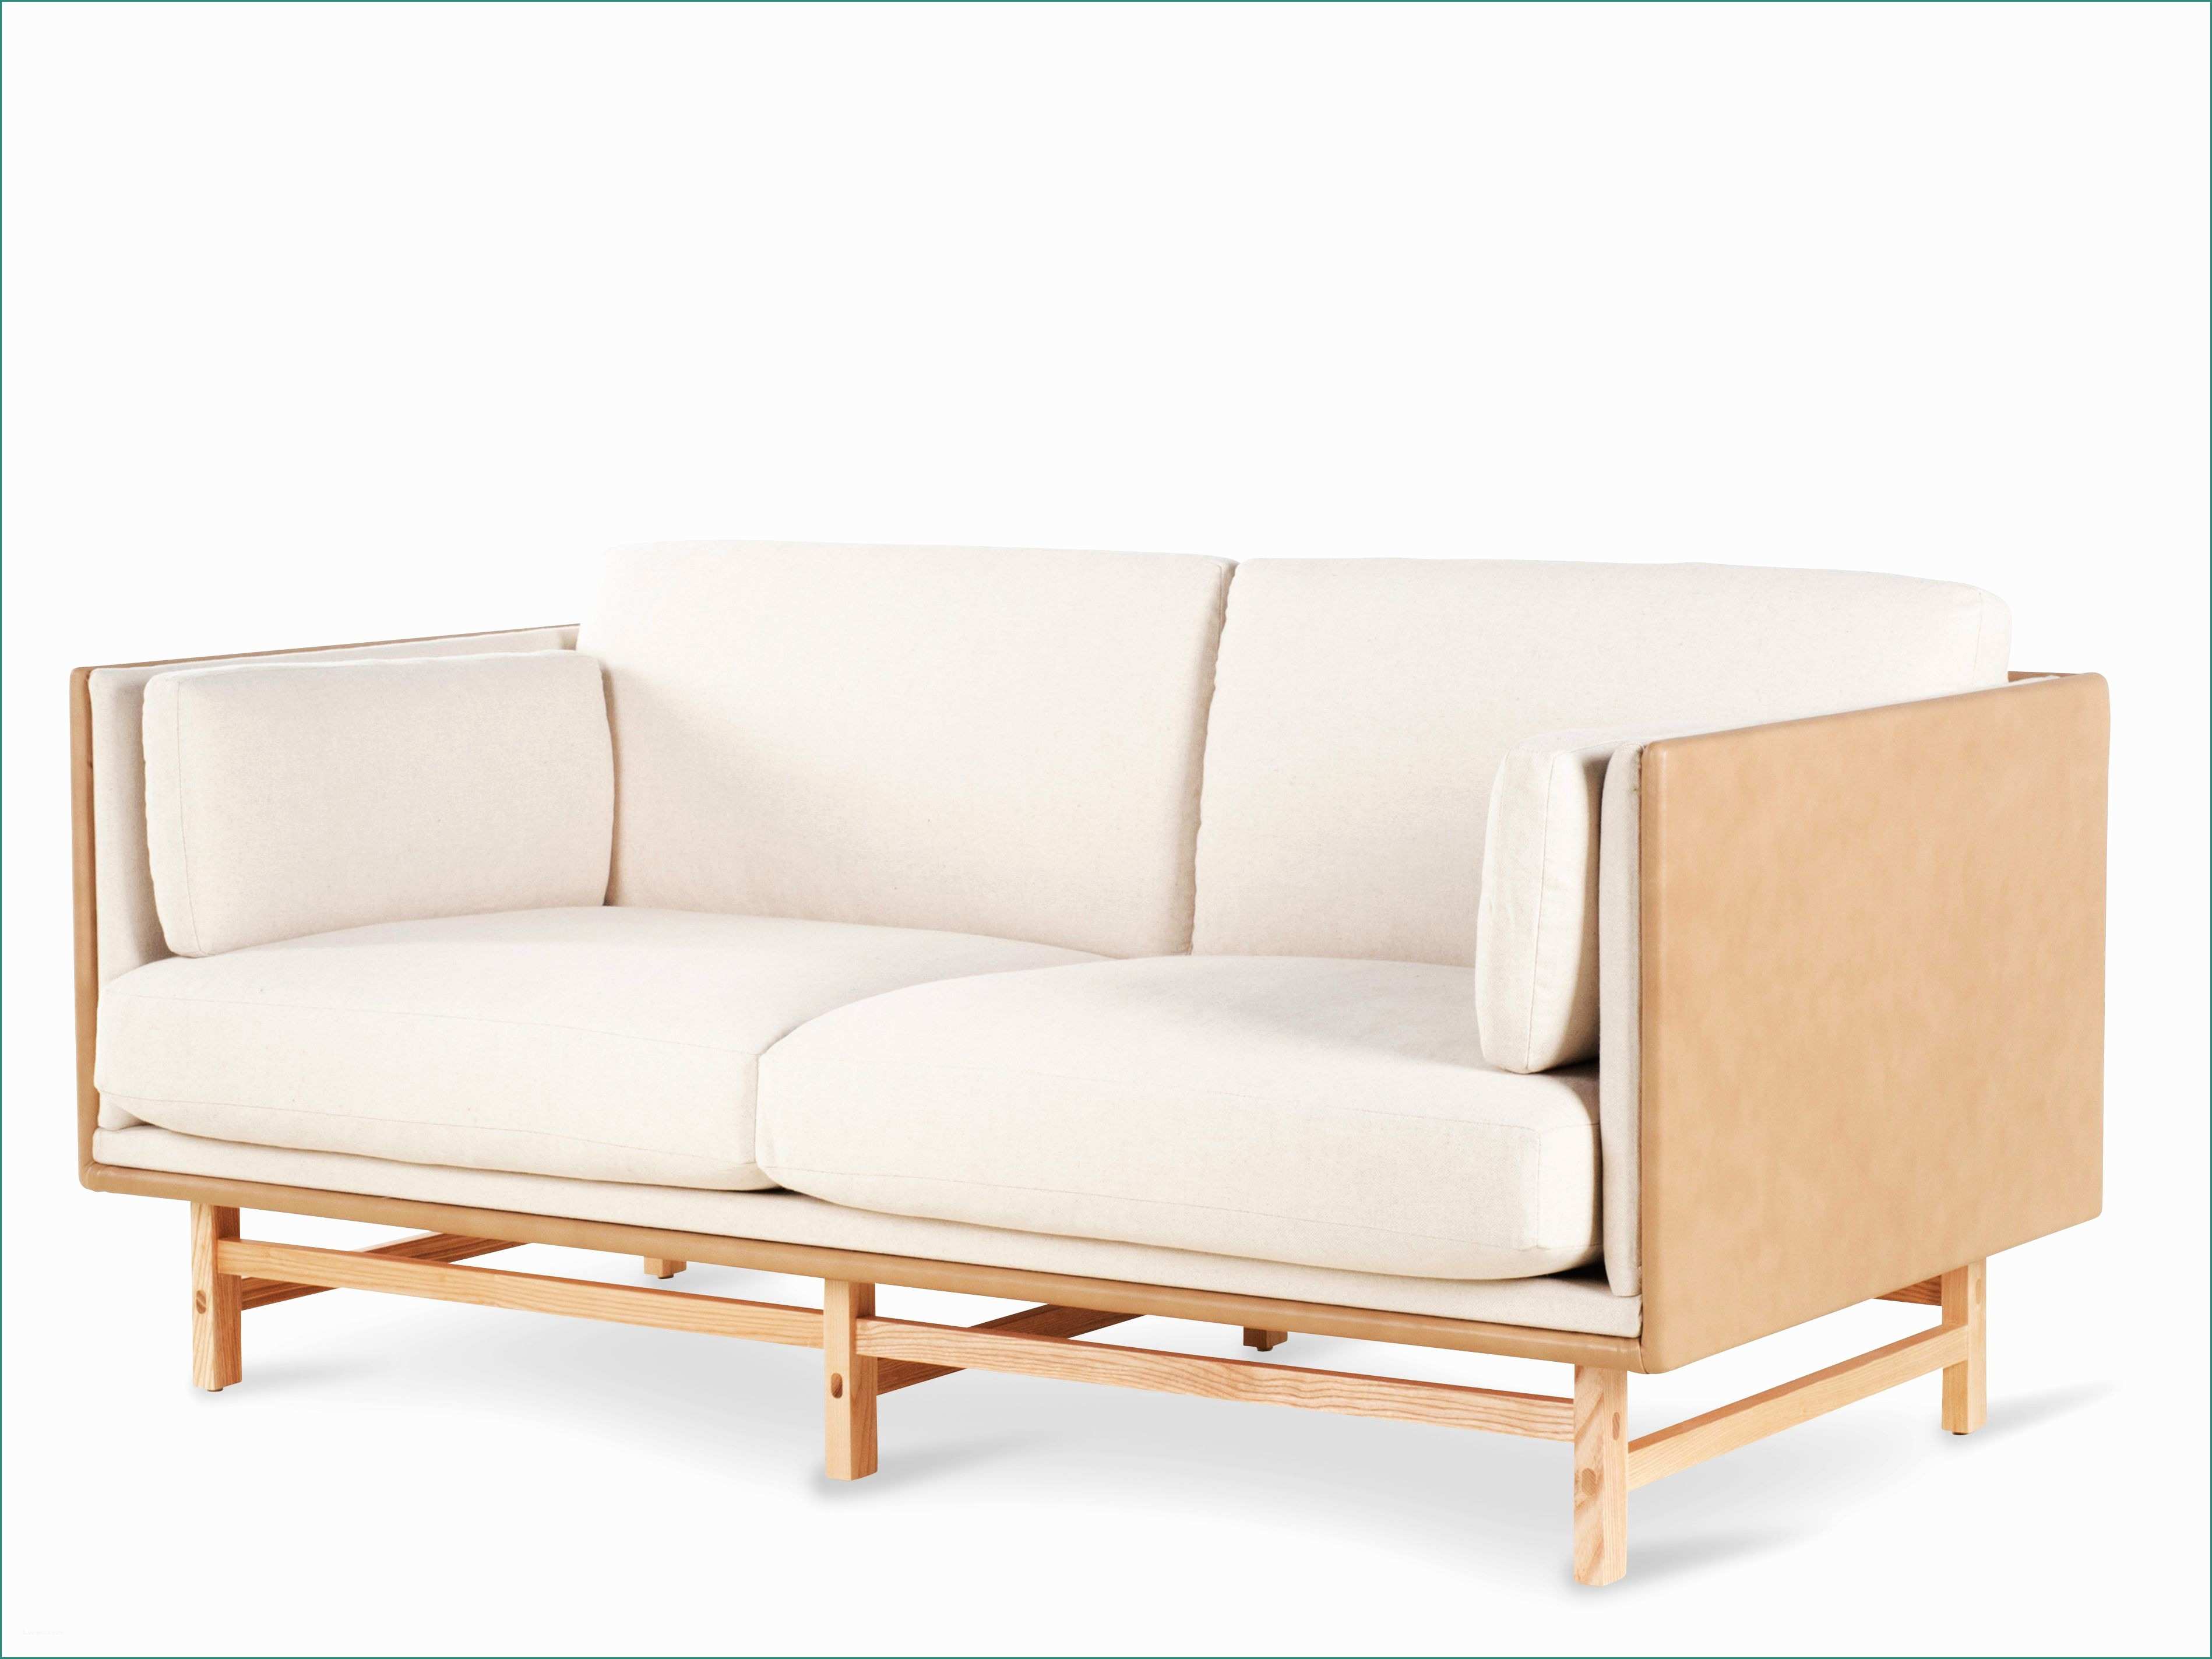 Poltrone Global Relax E Sw sofa Two Seater by Stellar Works è ¾è ¡å¸oeo